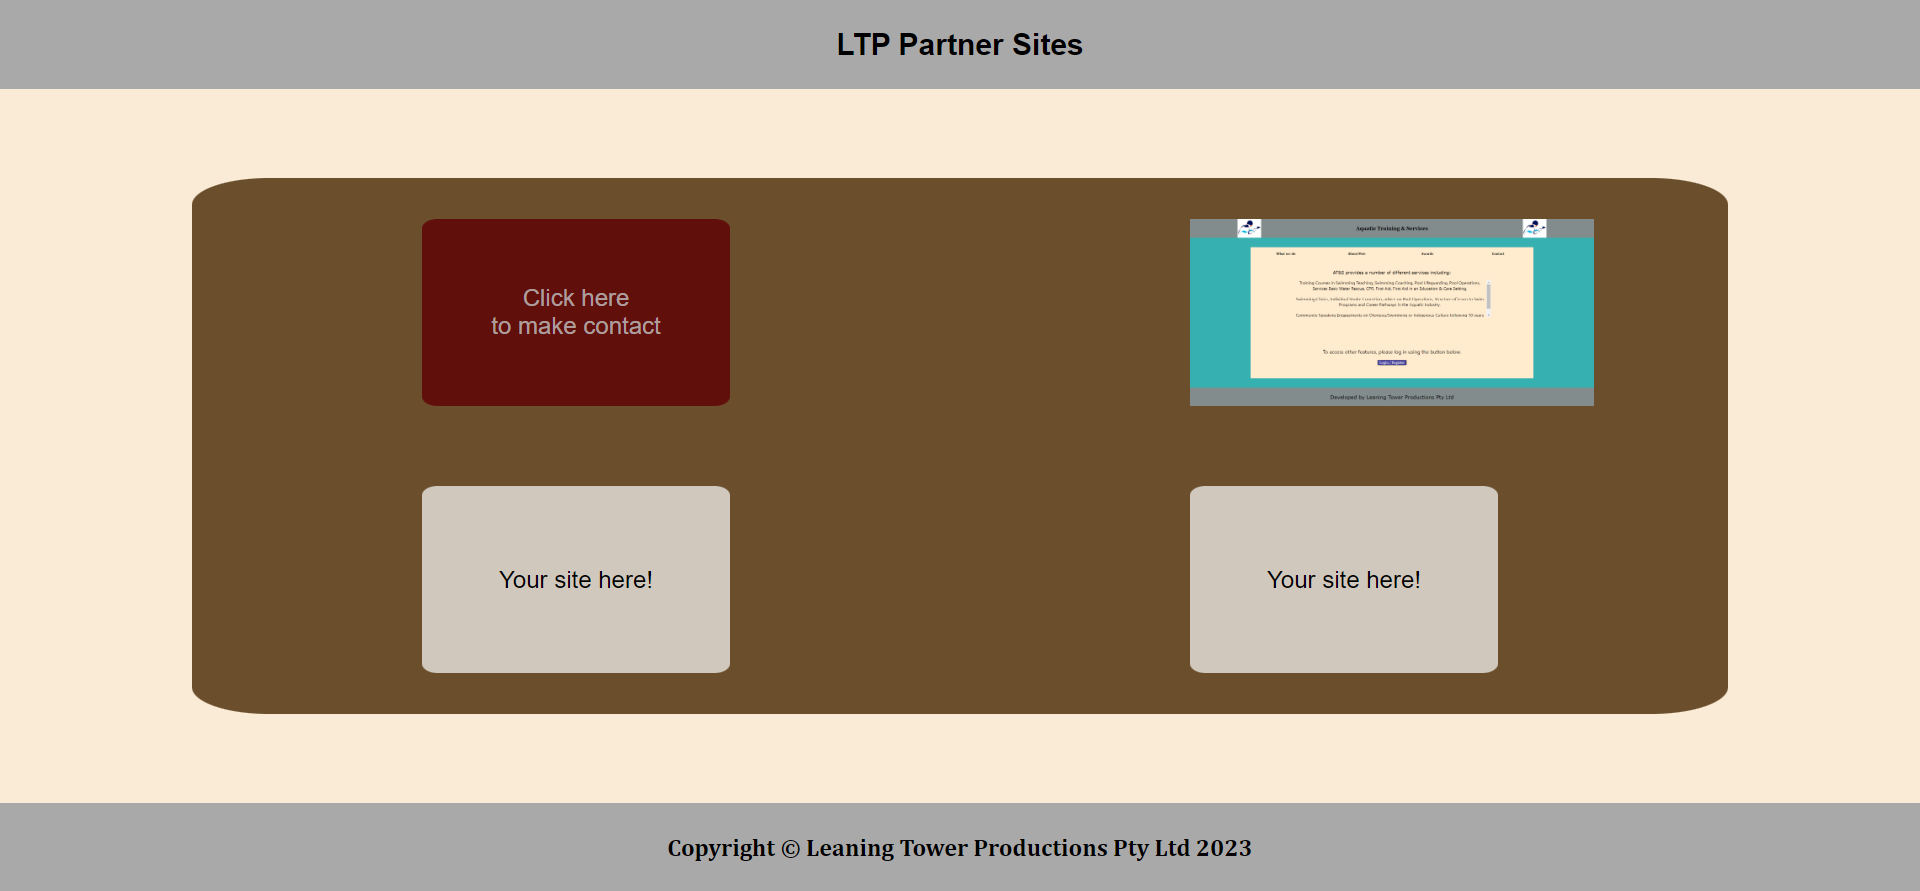 LTP Partner Sites